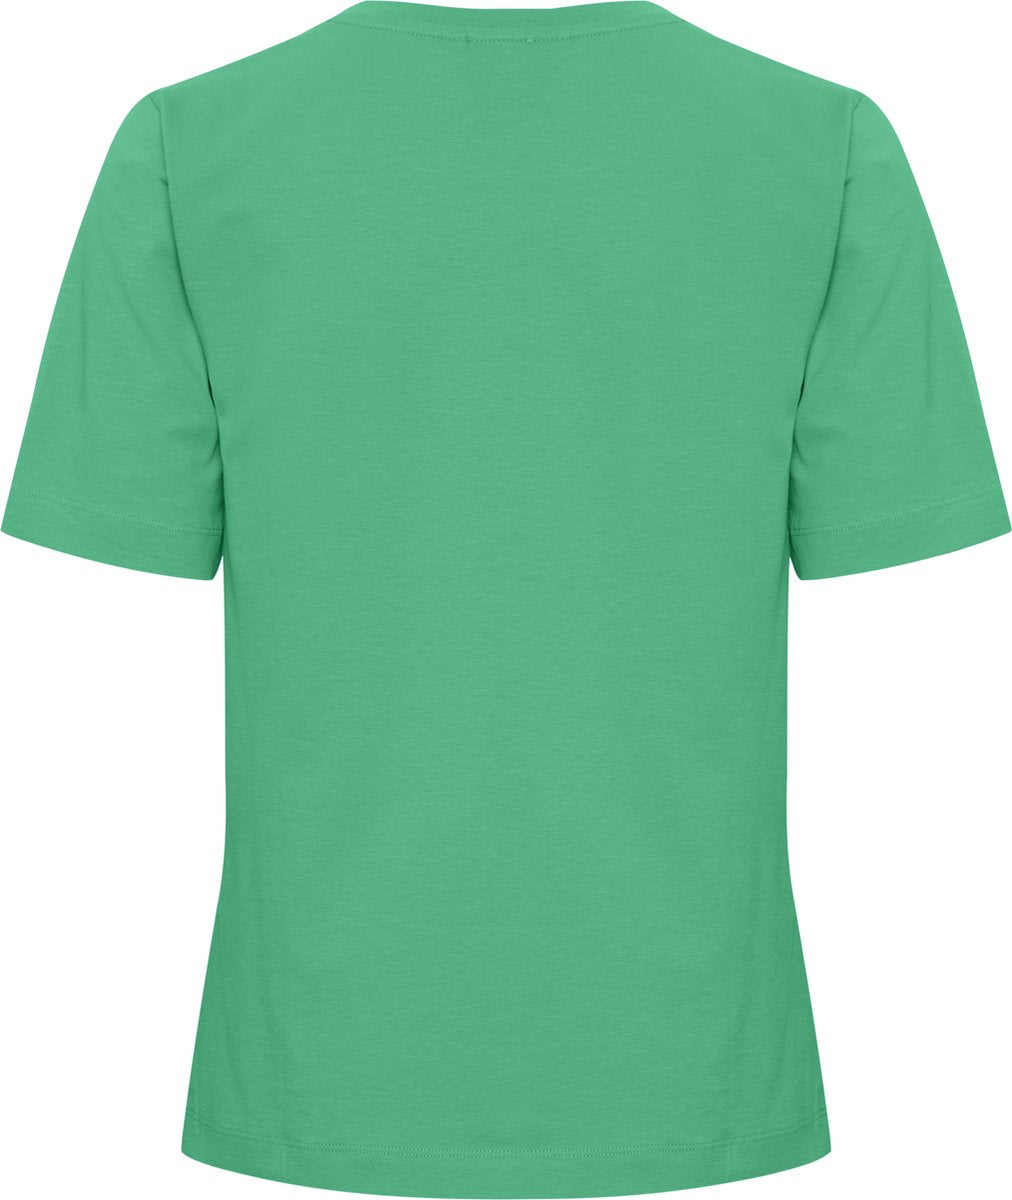 The Jogg Concept t-shirt mint